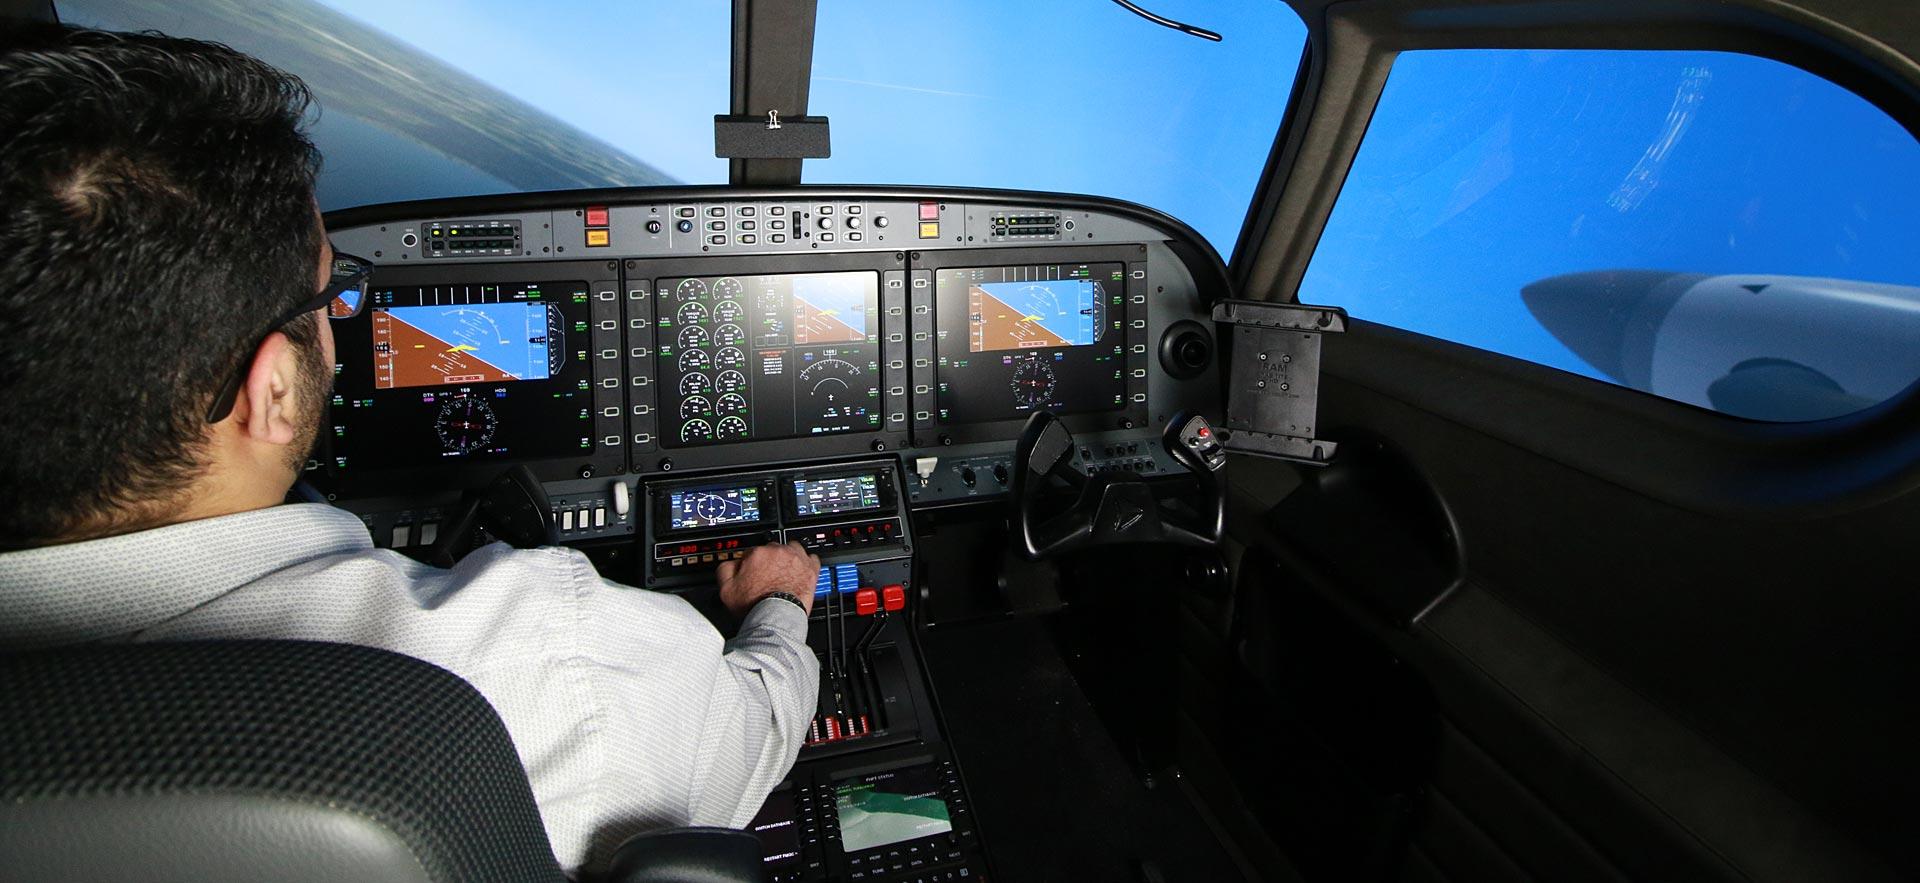 Aviation instructor operating one of the flight simulators.